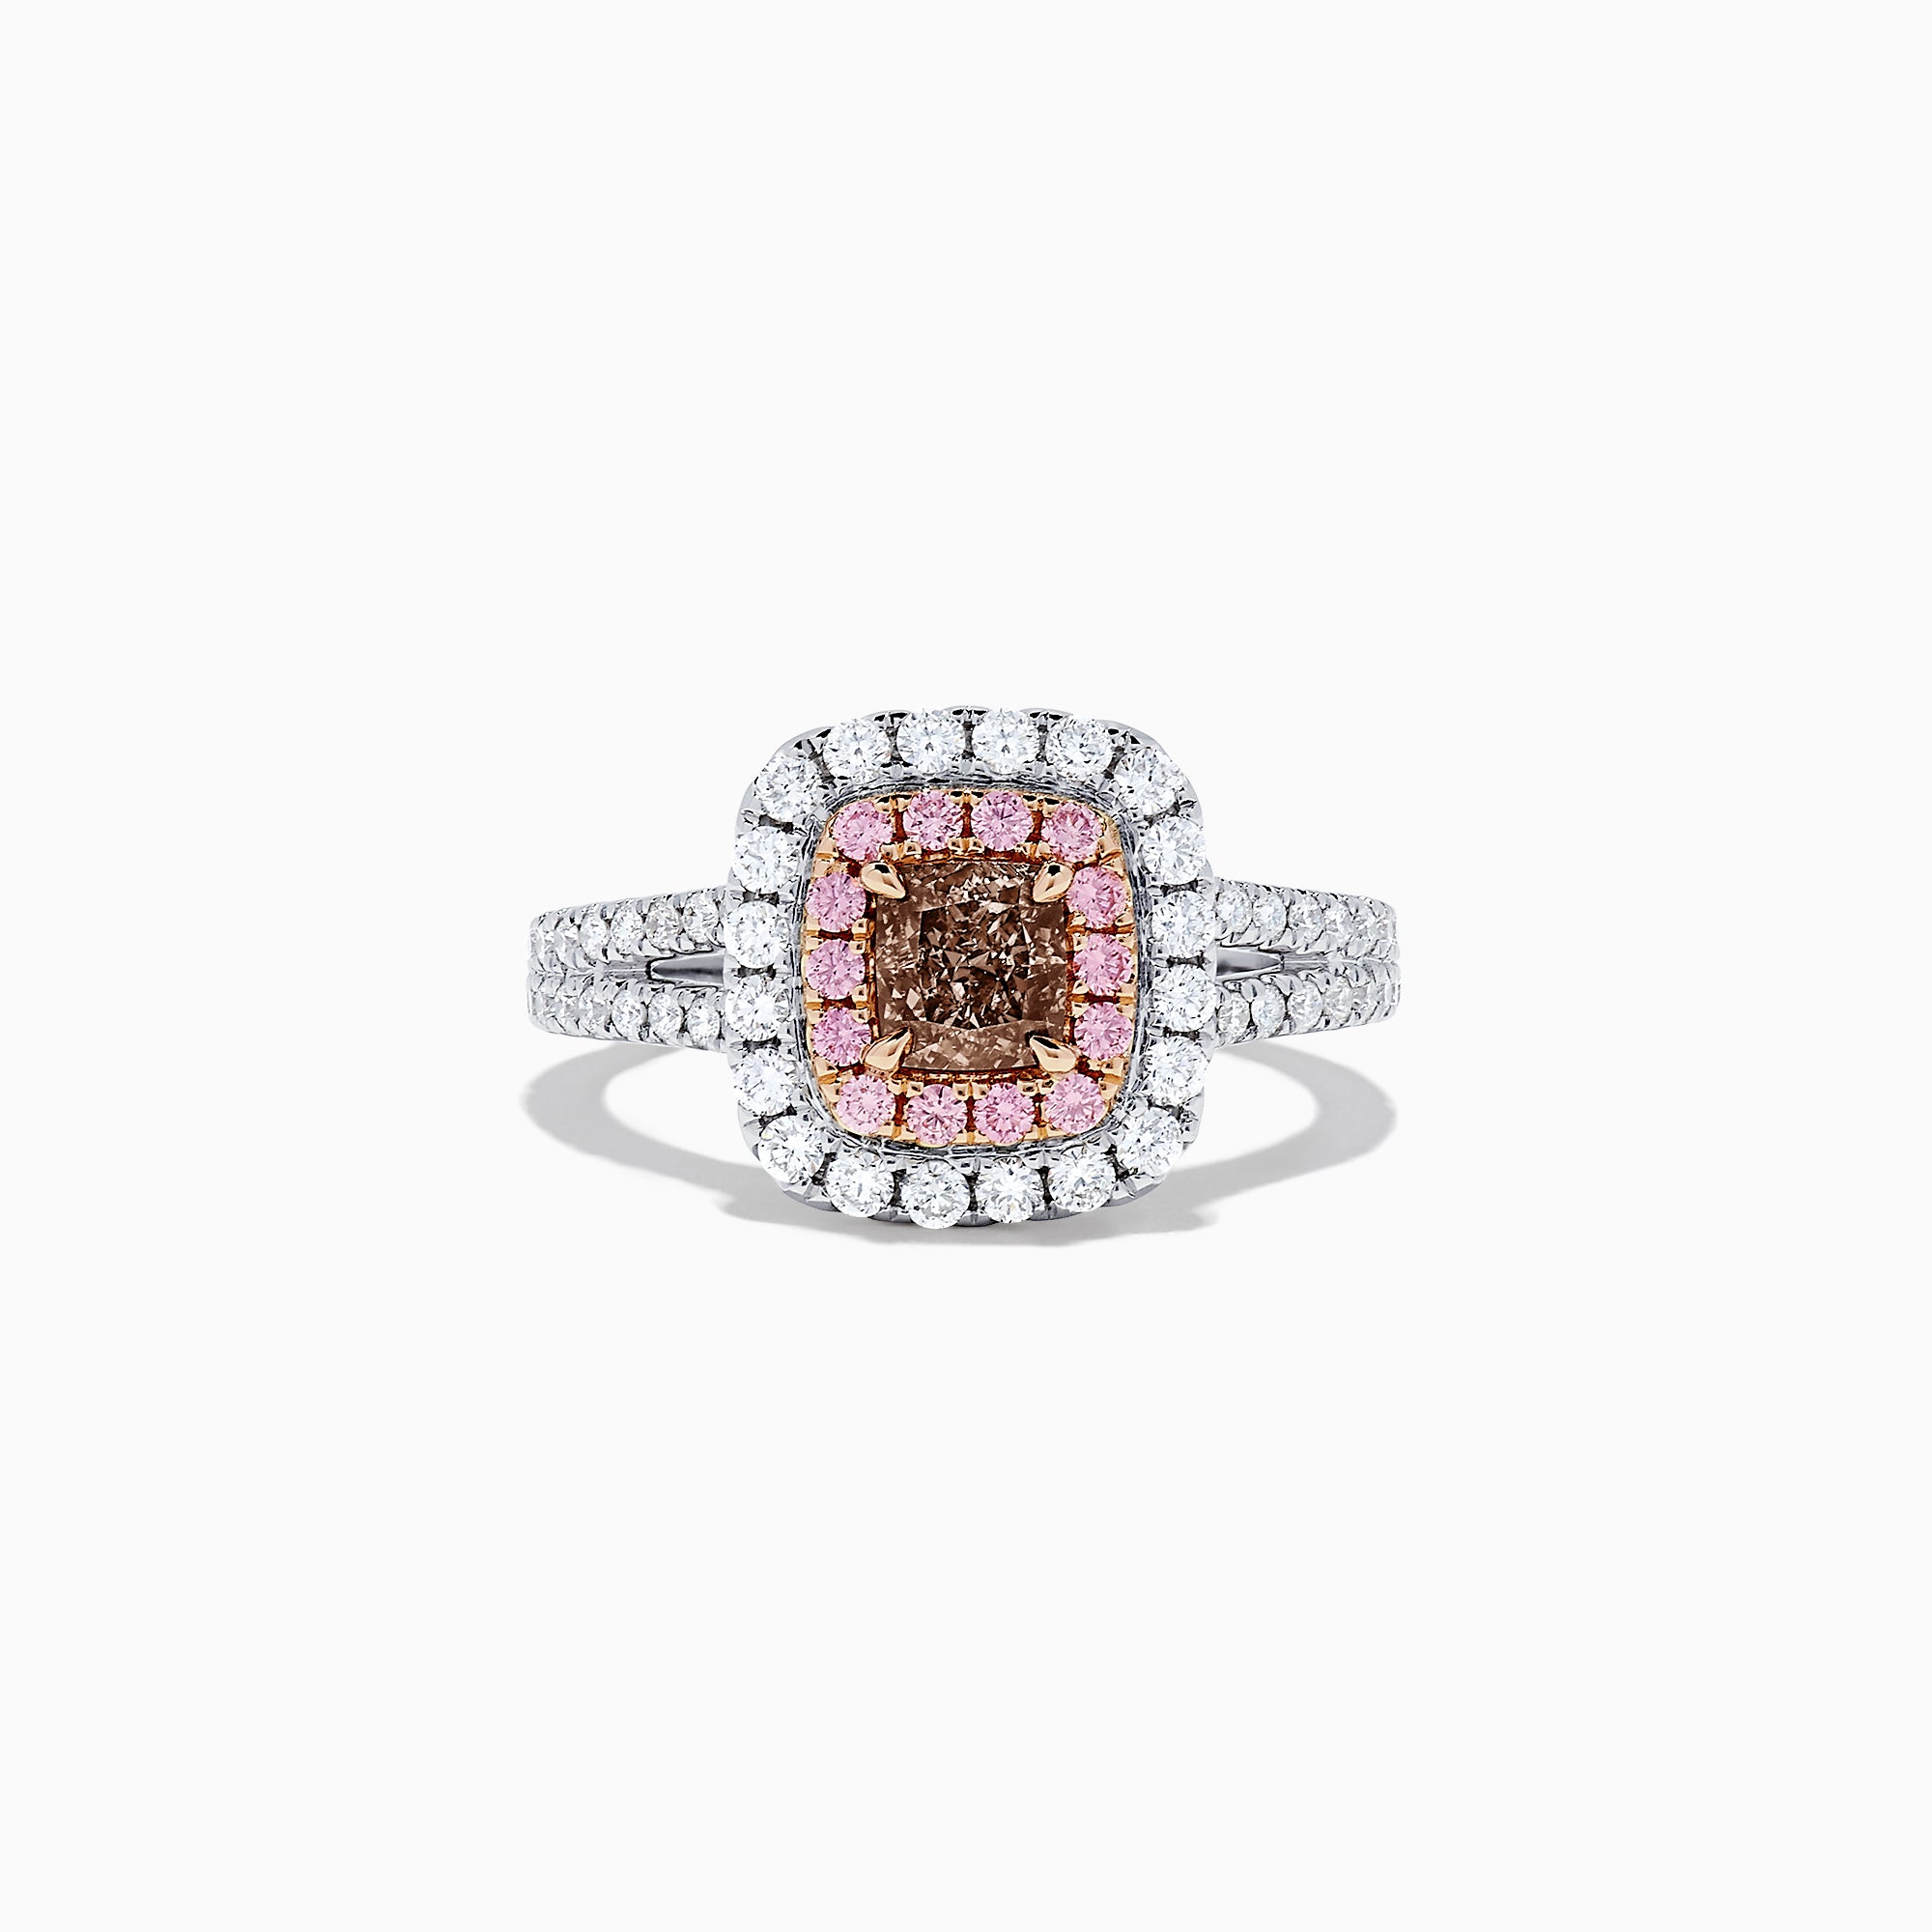 18K Gold White, Pink and GIA Certified Pinkish-Brown Diamond Ring, 1.44 TCW